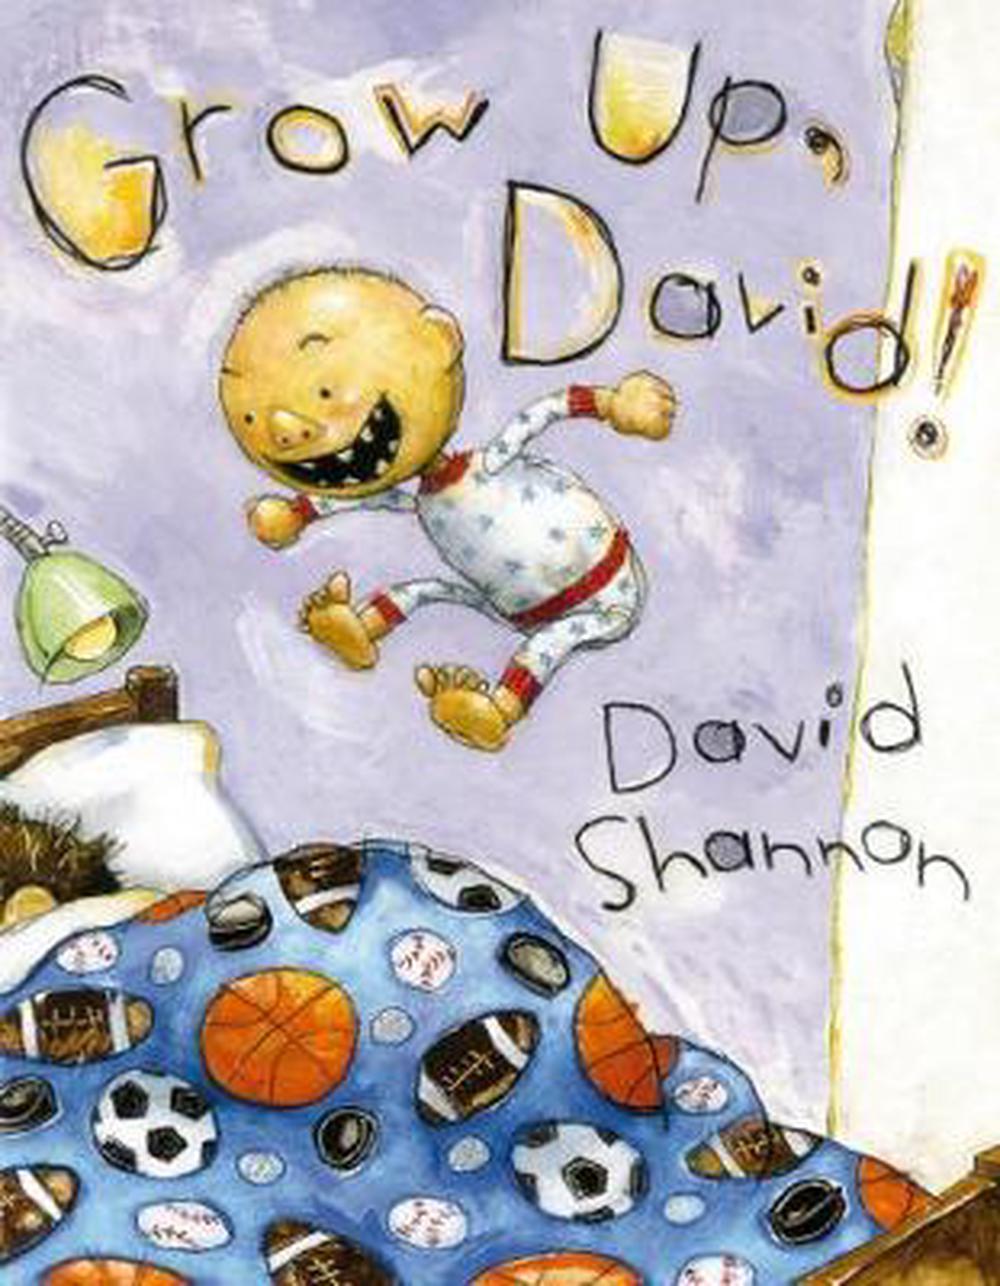 grow up david by david shannon